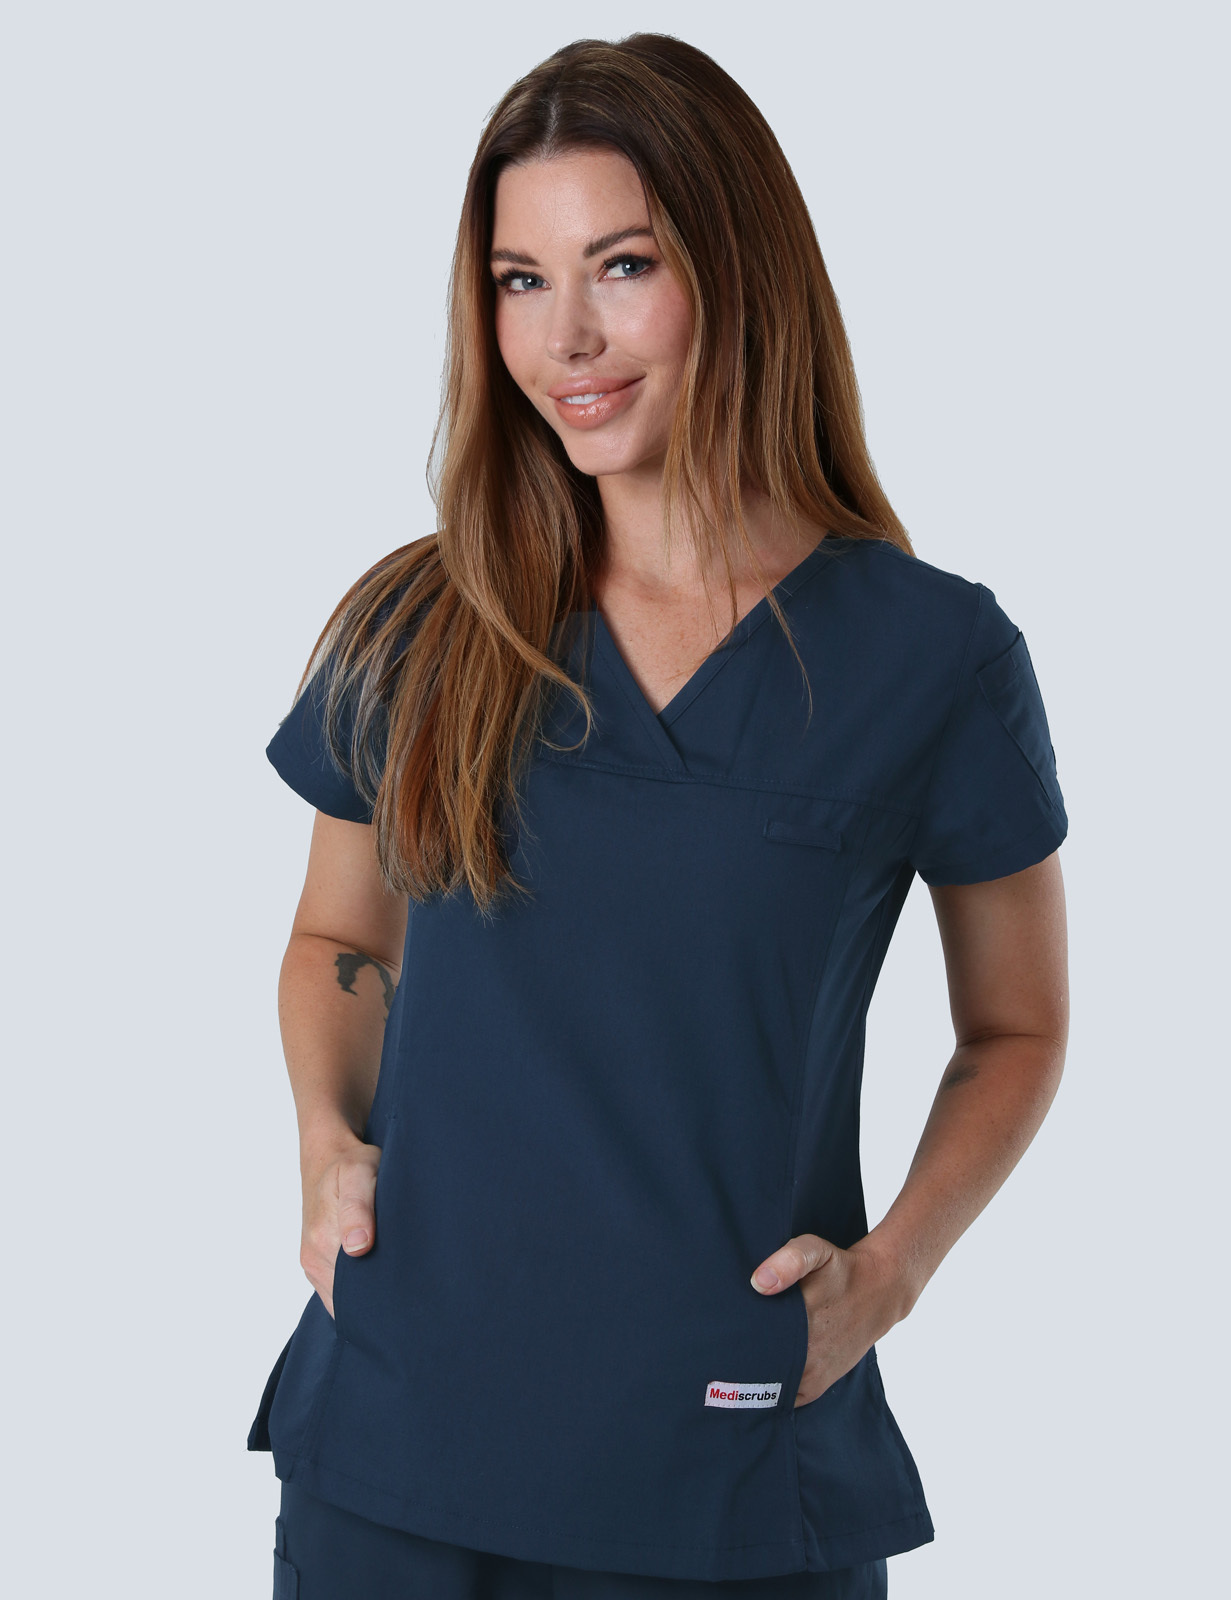 Rockhampton Hospital Emergency Department Registered Nurse Uniform Set Bundle (Women's Fit Solid Top and Cargo Pants in Navy + 3 Logos)